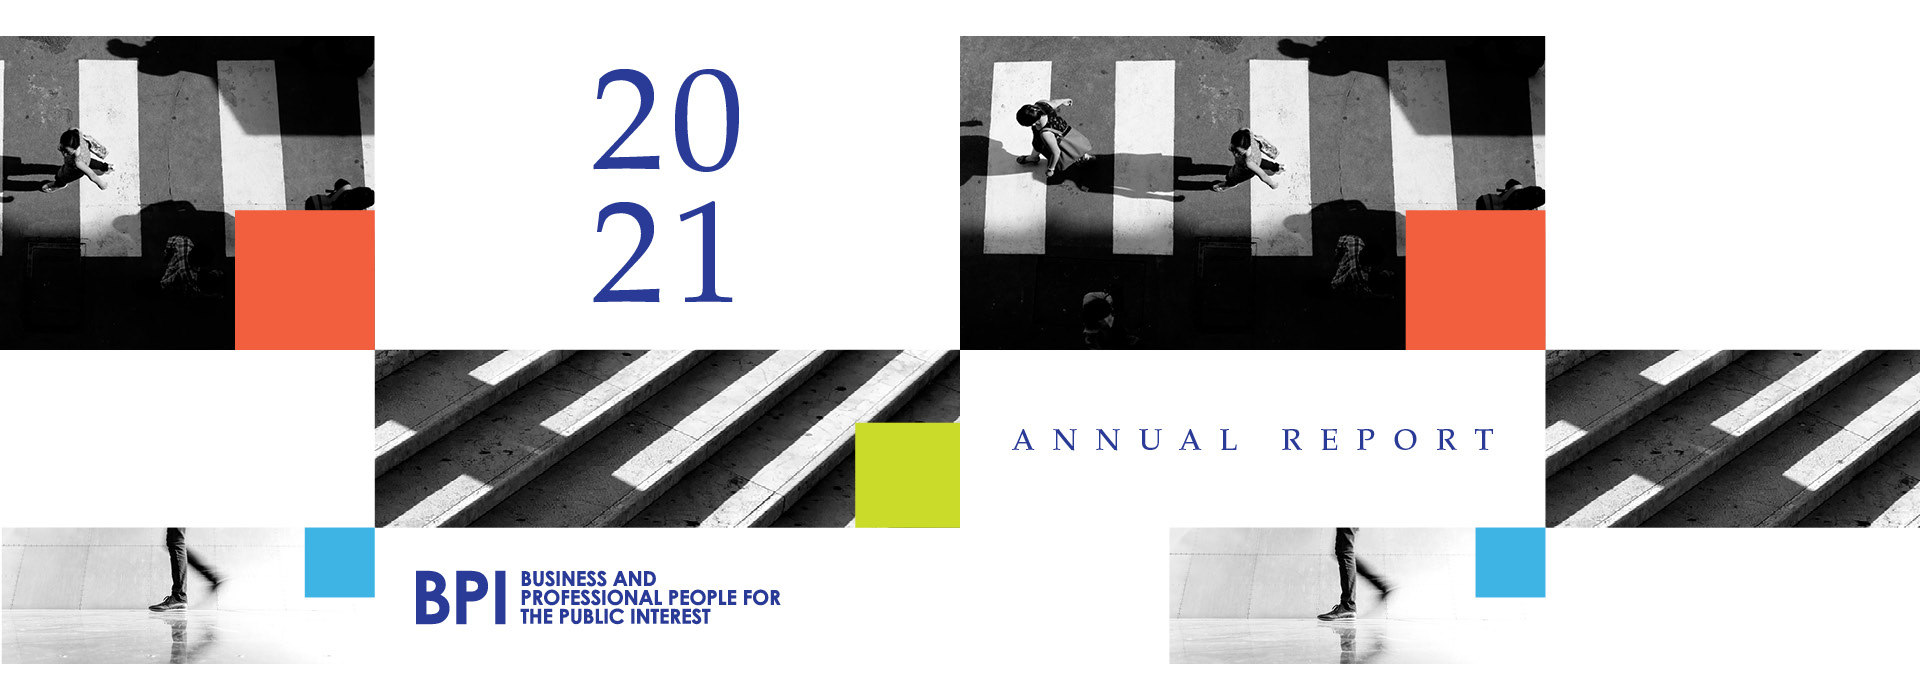 BPI 2021 Annual Report Cover 1920x700